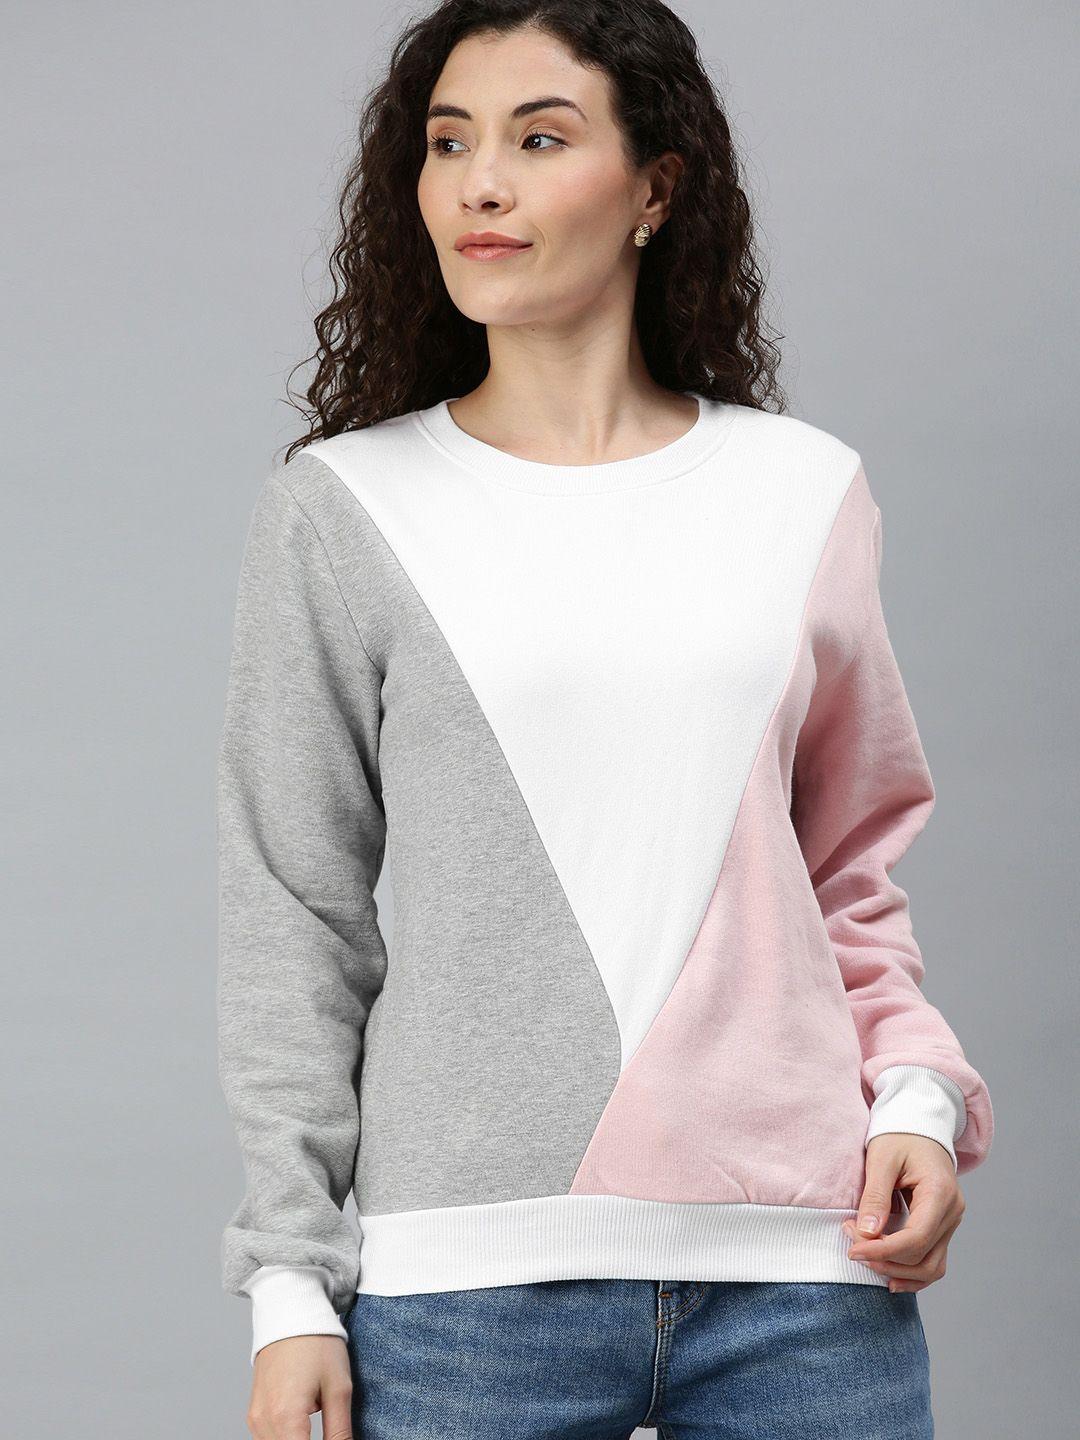 campus sutra women white & pink colourblocked pullover sweatshirt